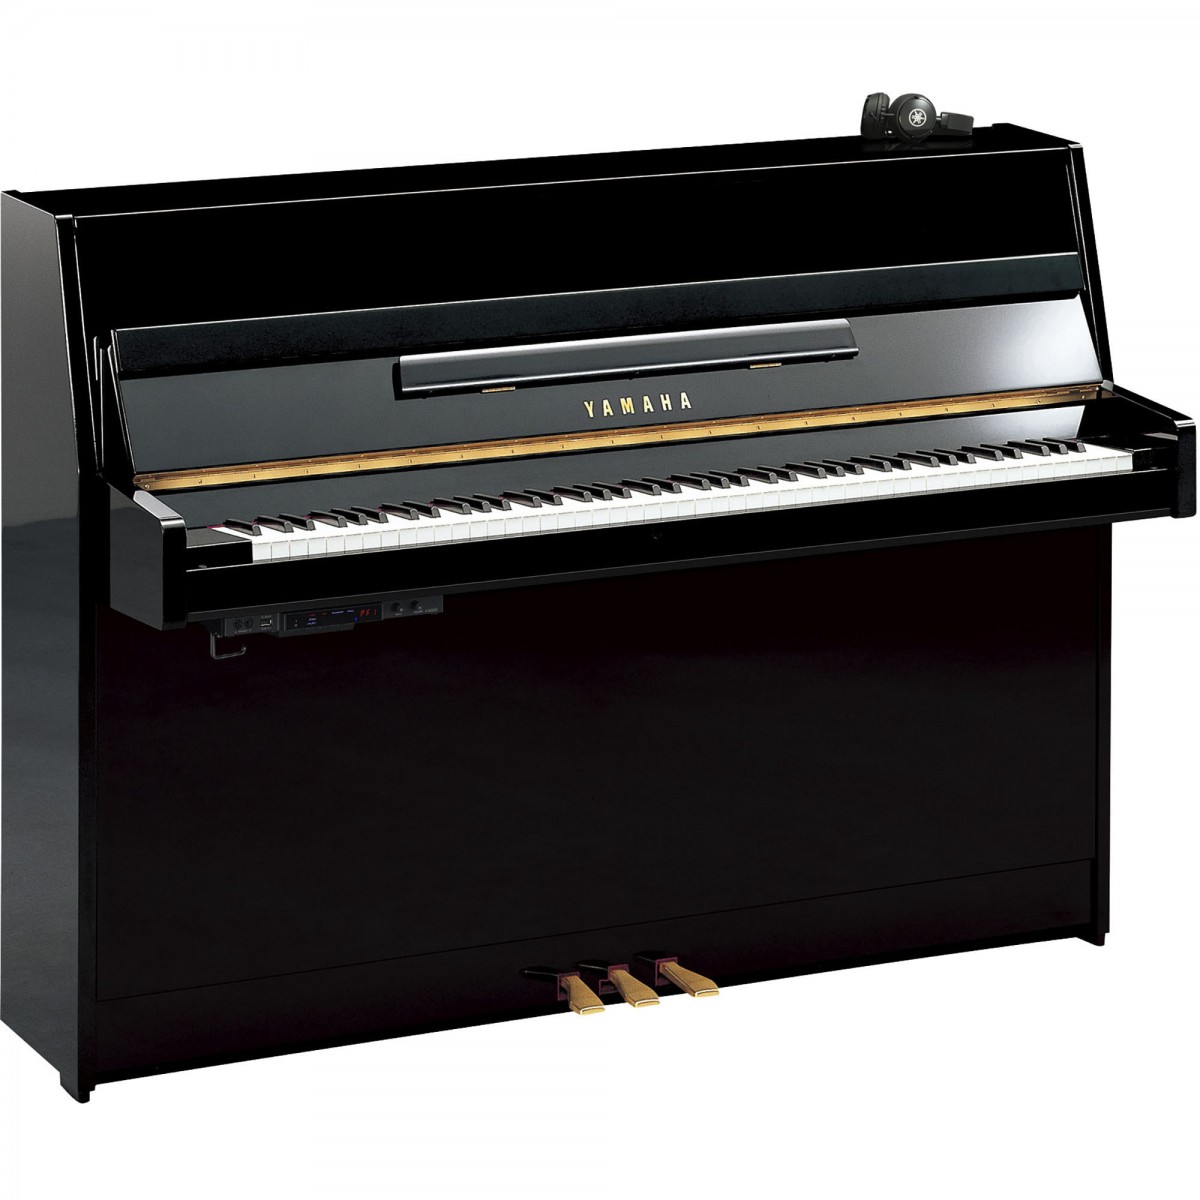 Yamaha B1 SC3 Silent Klavier schwarz Hochglanz